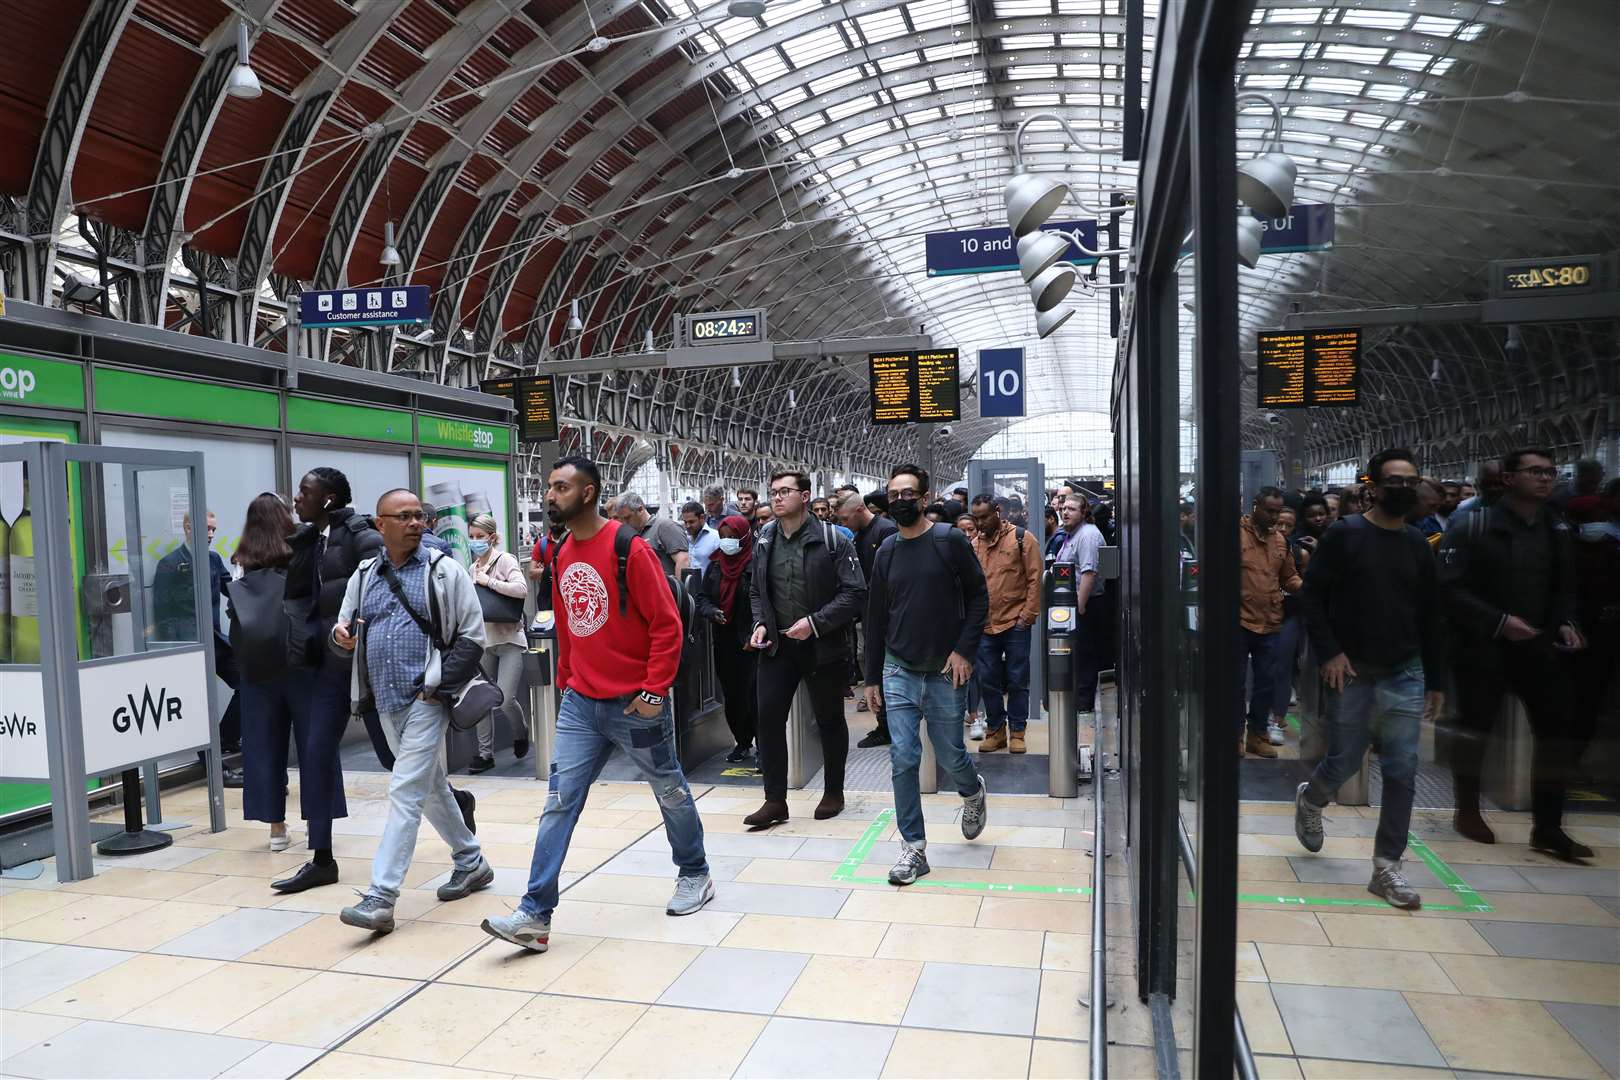 A flurry of passengers at Paddington station in London (Ashlee Ruggels/PA)